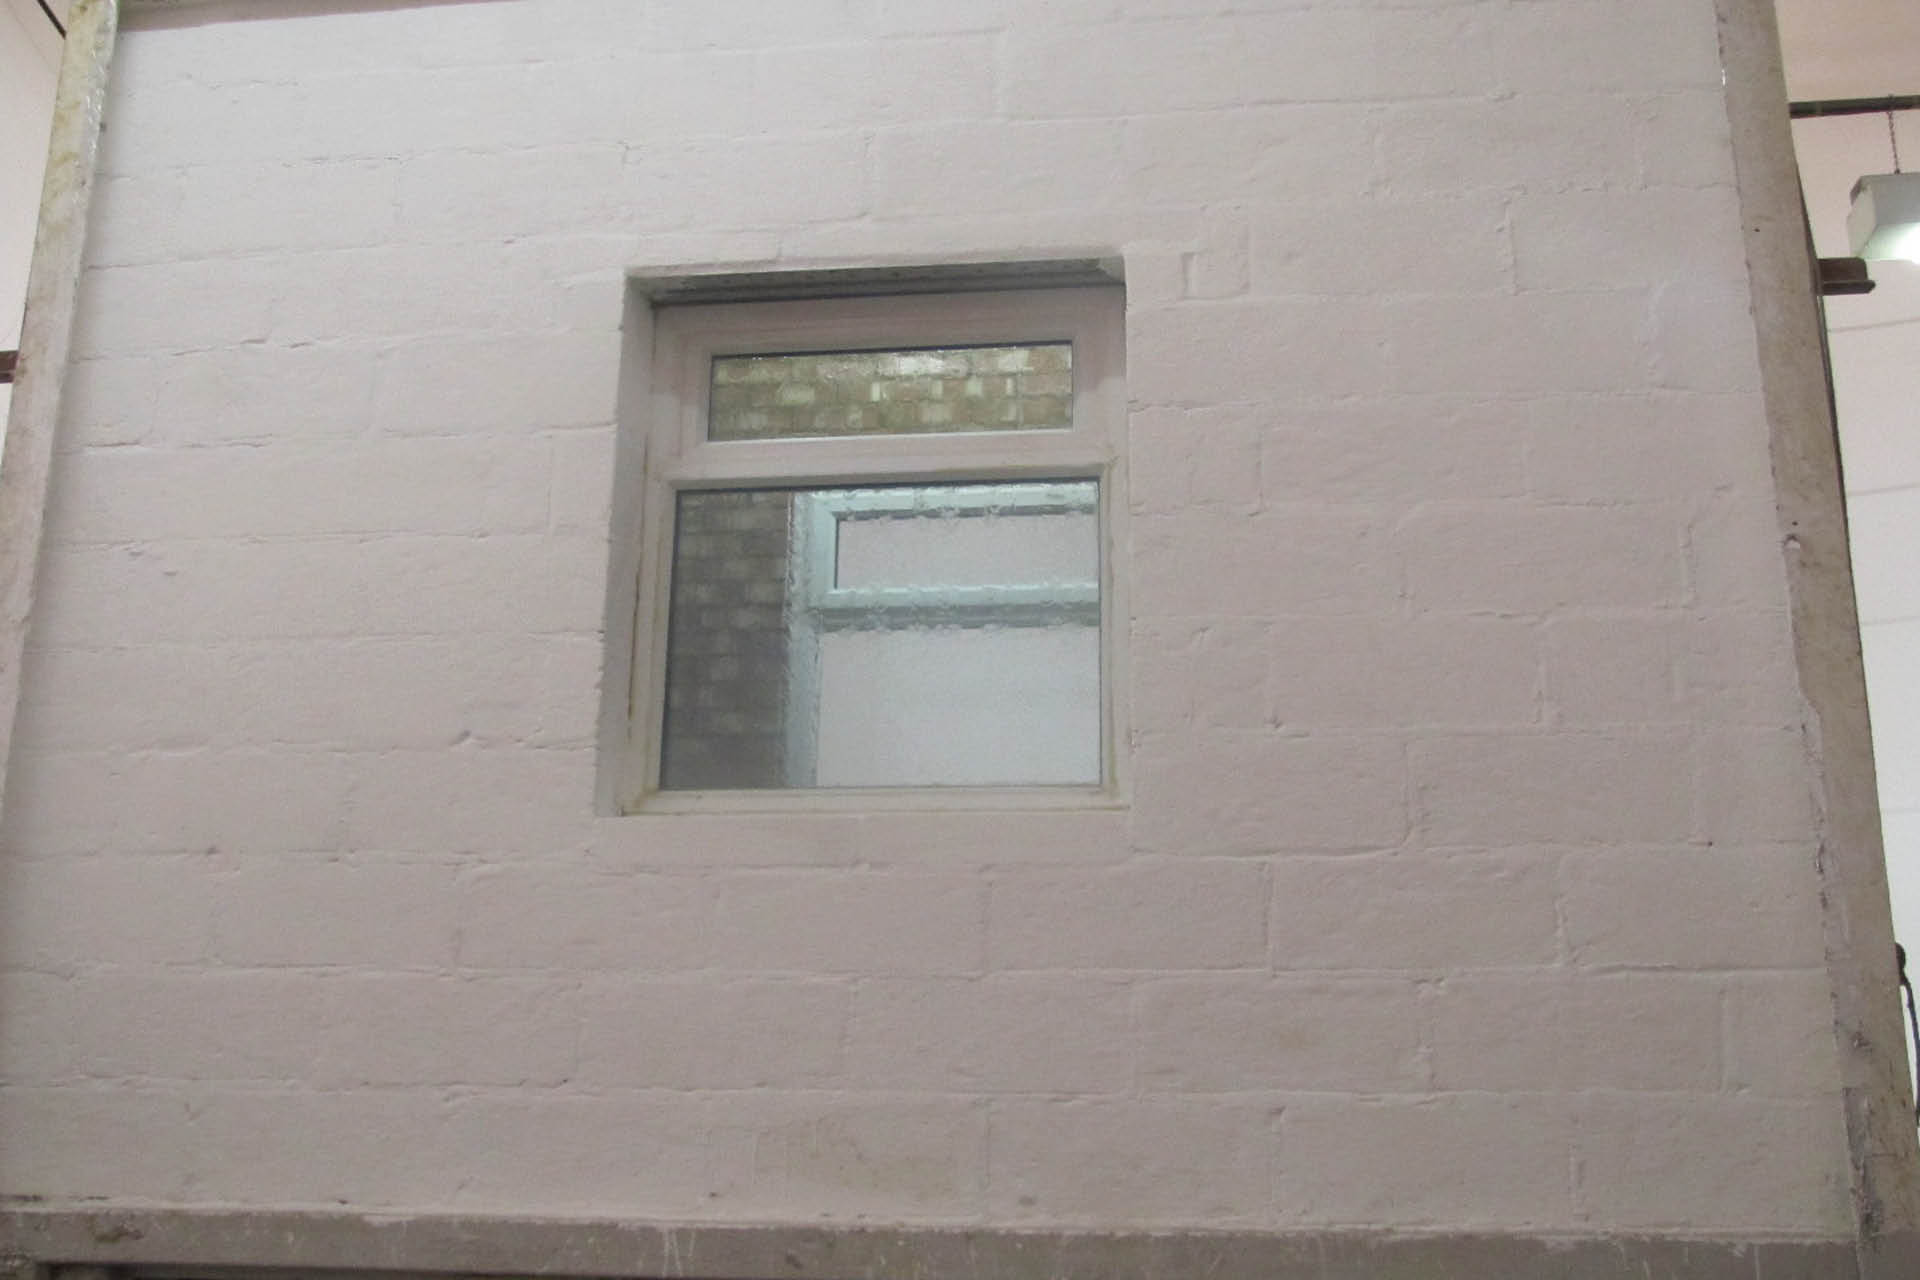 a photo of a bathroom window